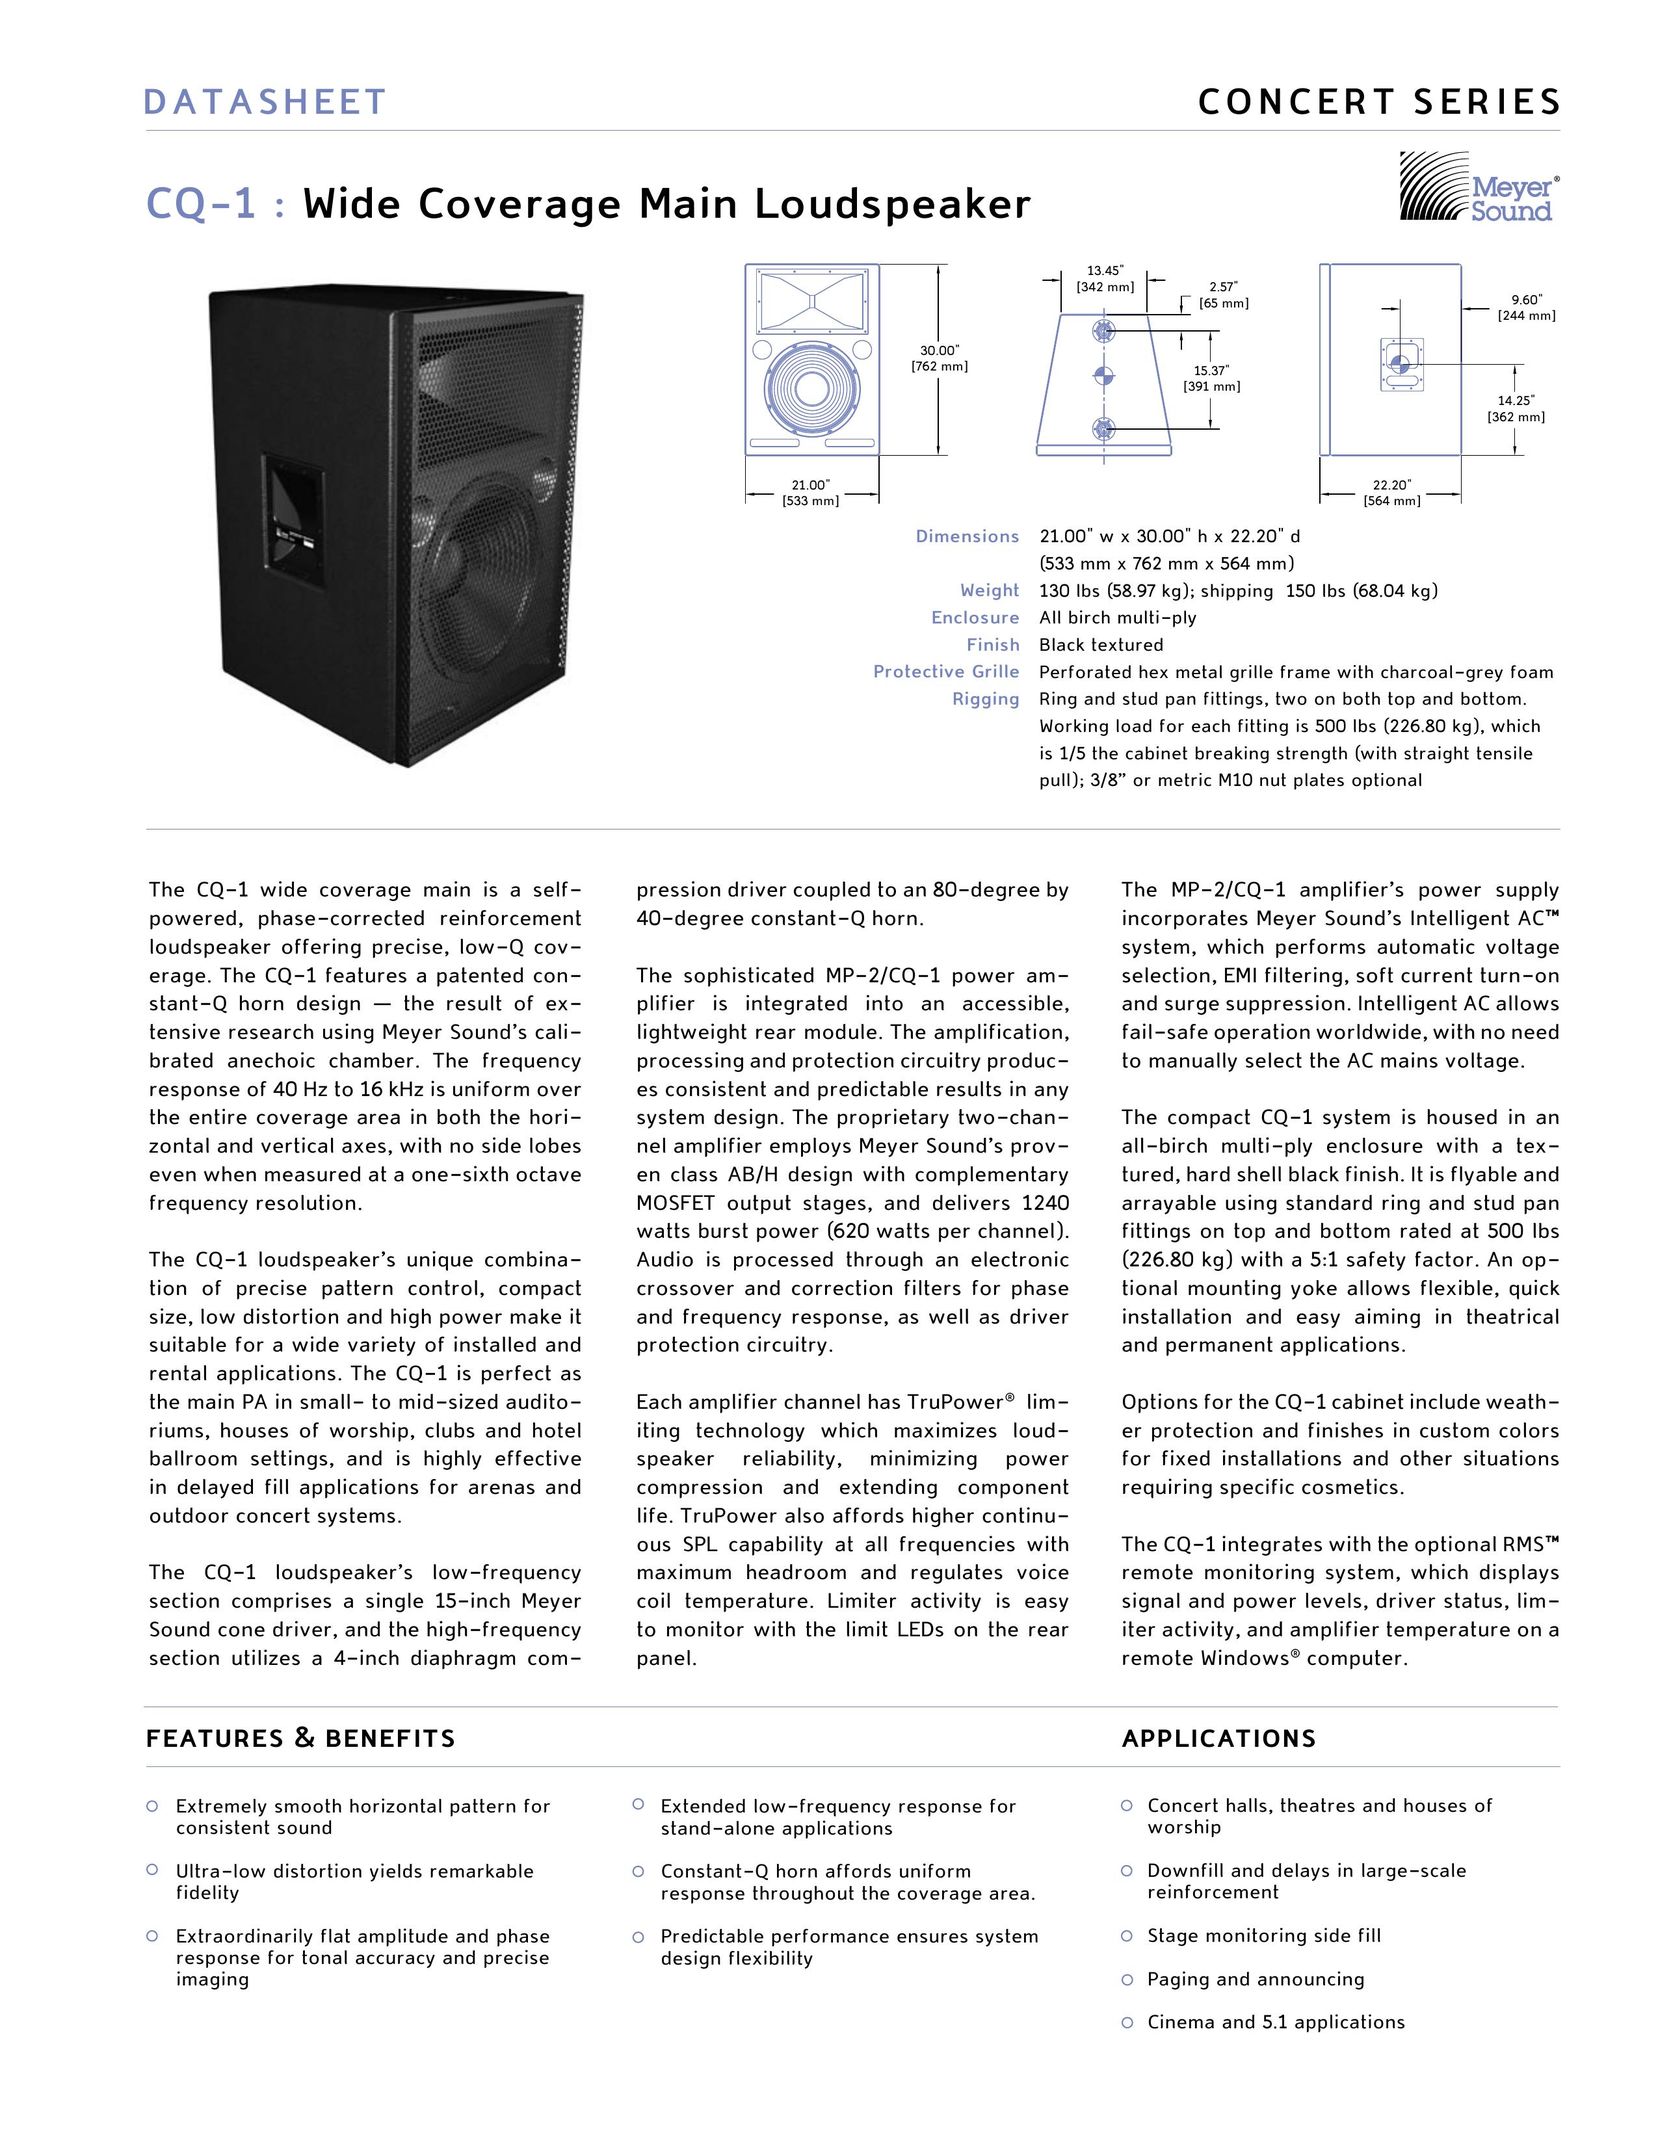 Meyer Sound CQ-1 Portable Speaker User Manual